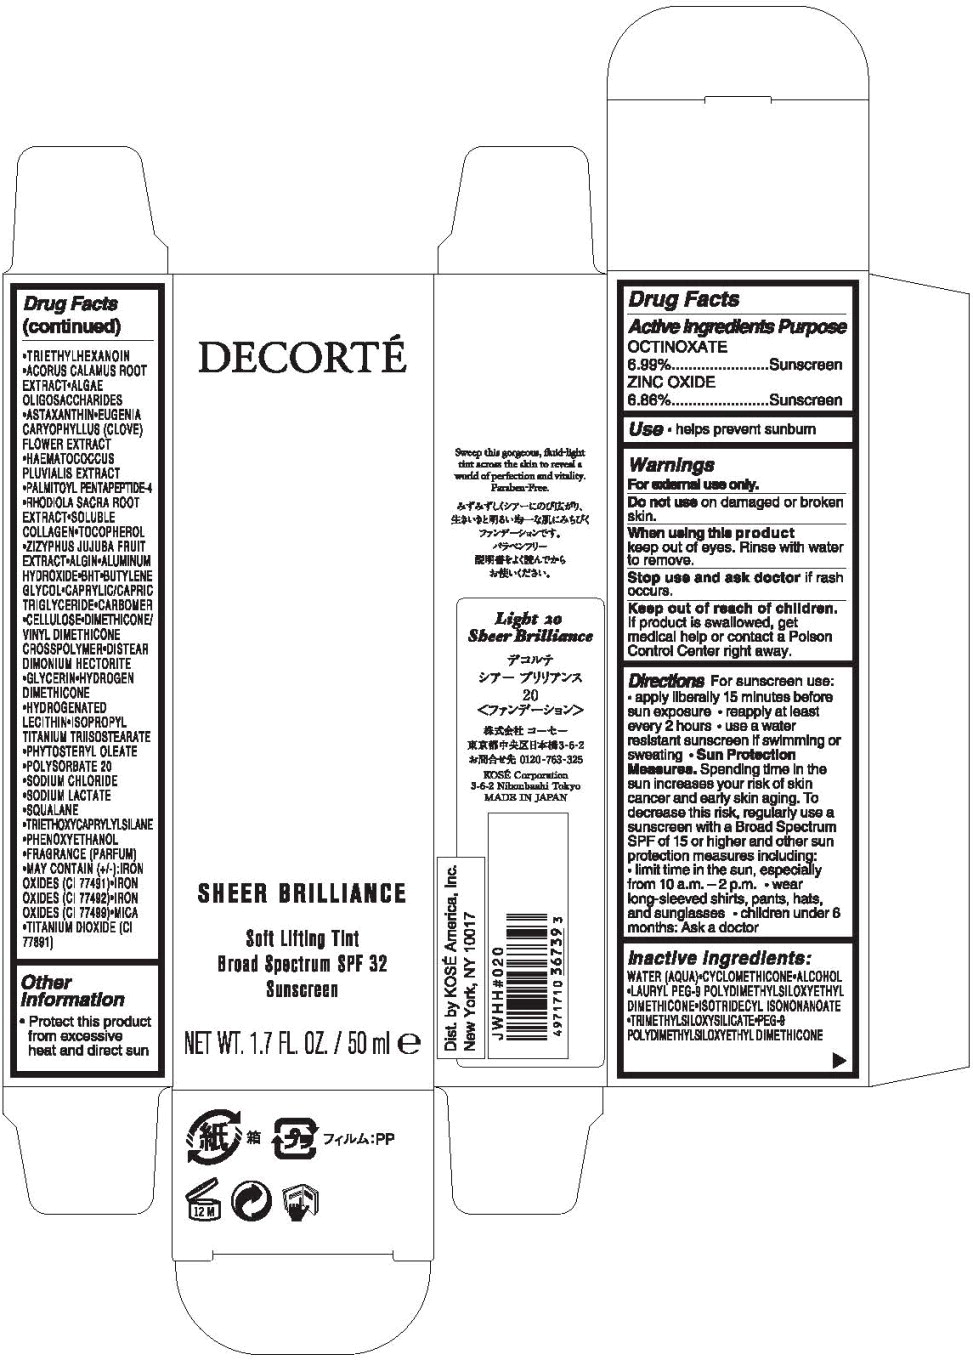 Principal Display Panel - Decorte Sheet Brilliance 20 Level 50 ml Carton Label
